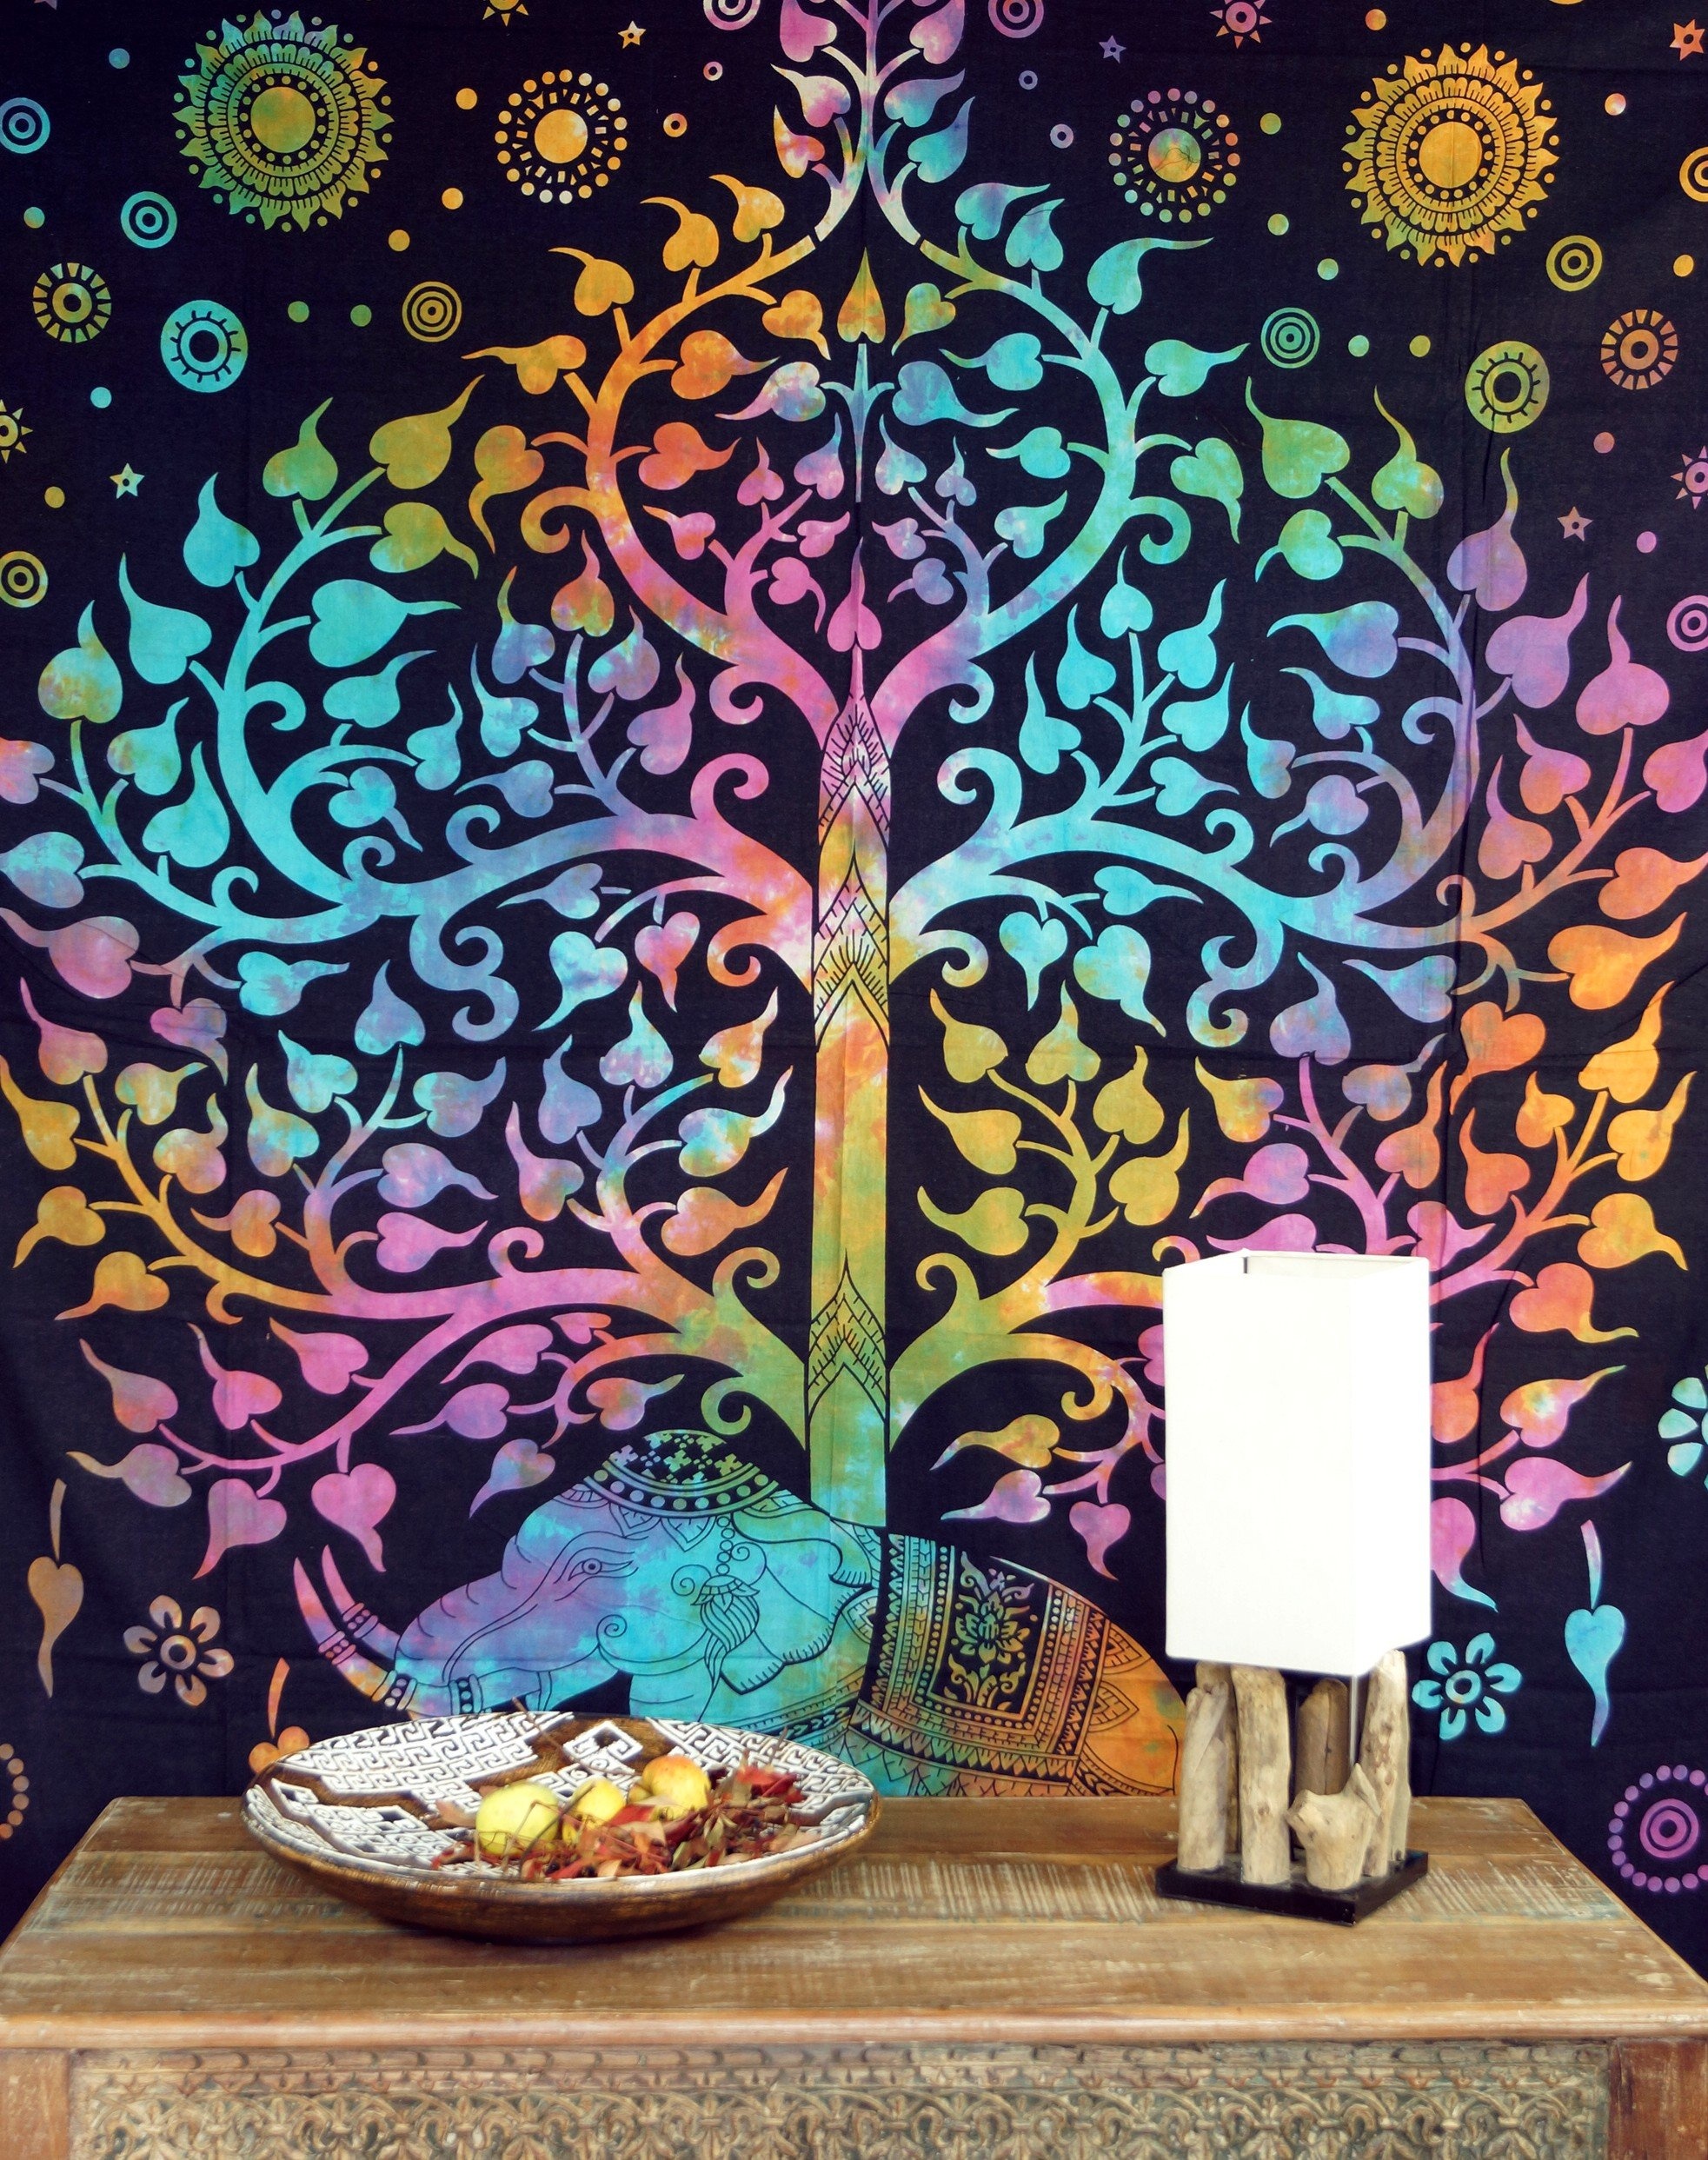 GURU SHOP Boho-Style Wandbehang, Indische Tagesdecke Lebensbaum - Tree of Life/Regenbogen, Mehrfarbig, Baumwolle, 200x130x0,2 cm, Bettüberwurf, Sofa Überwurf